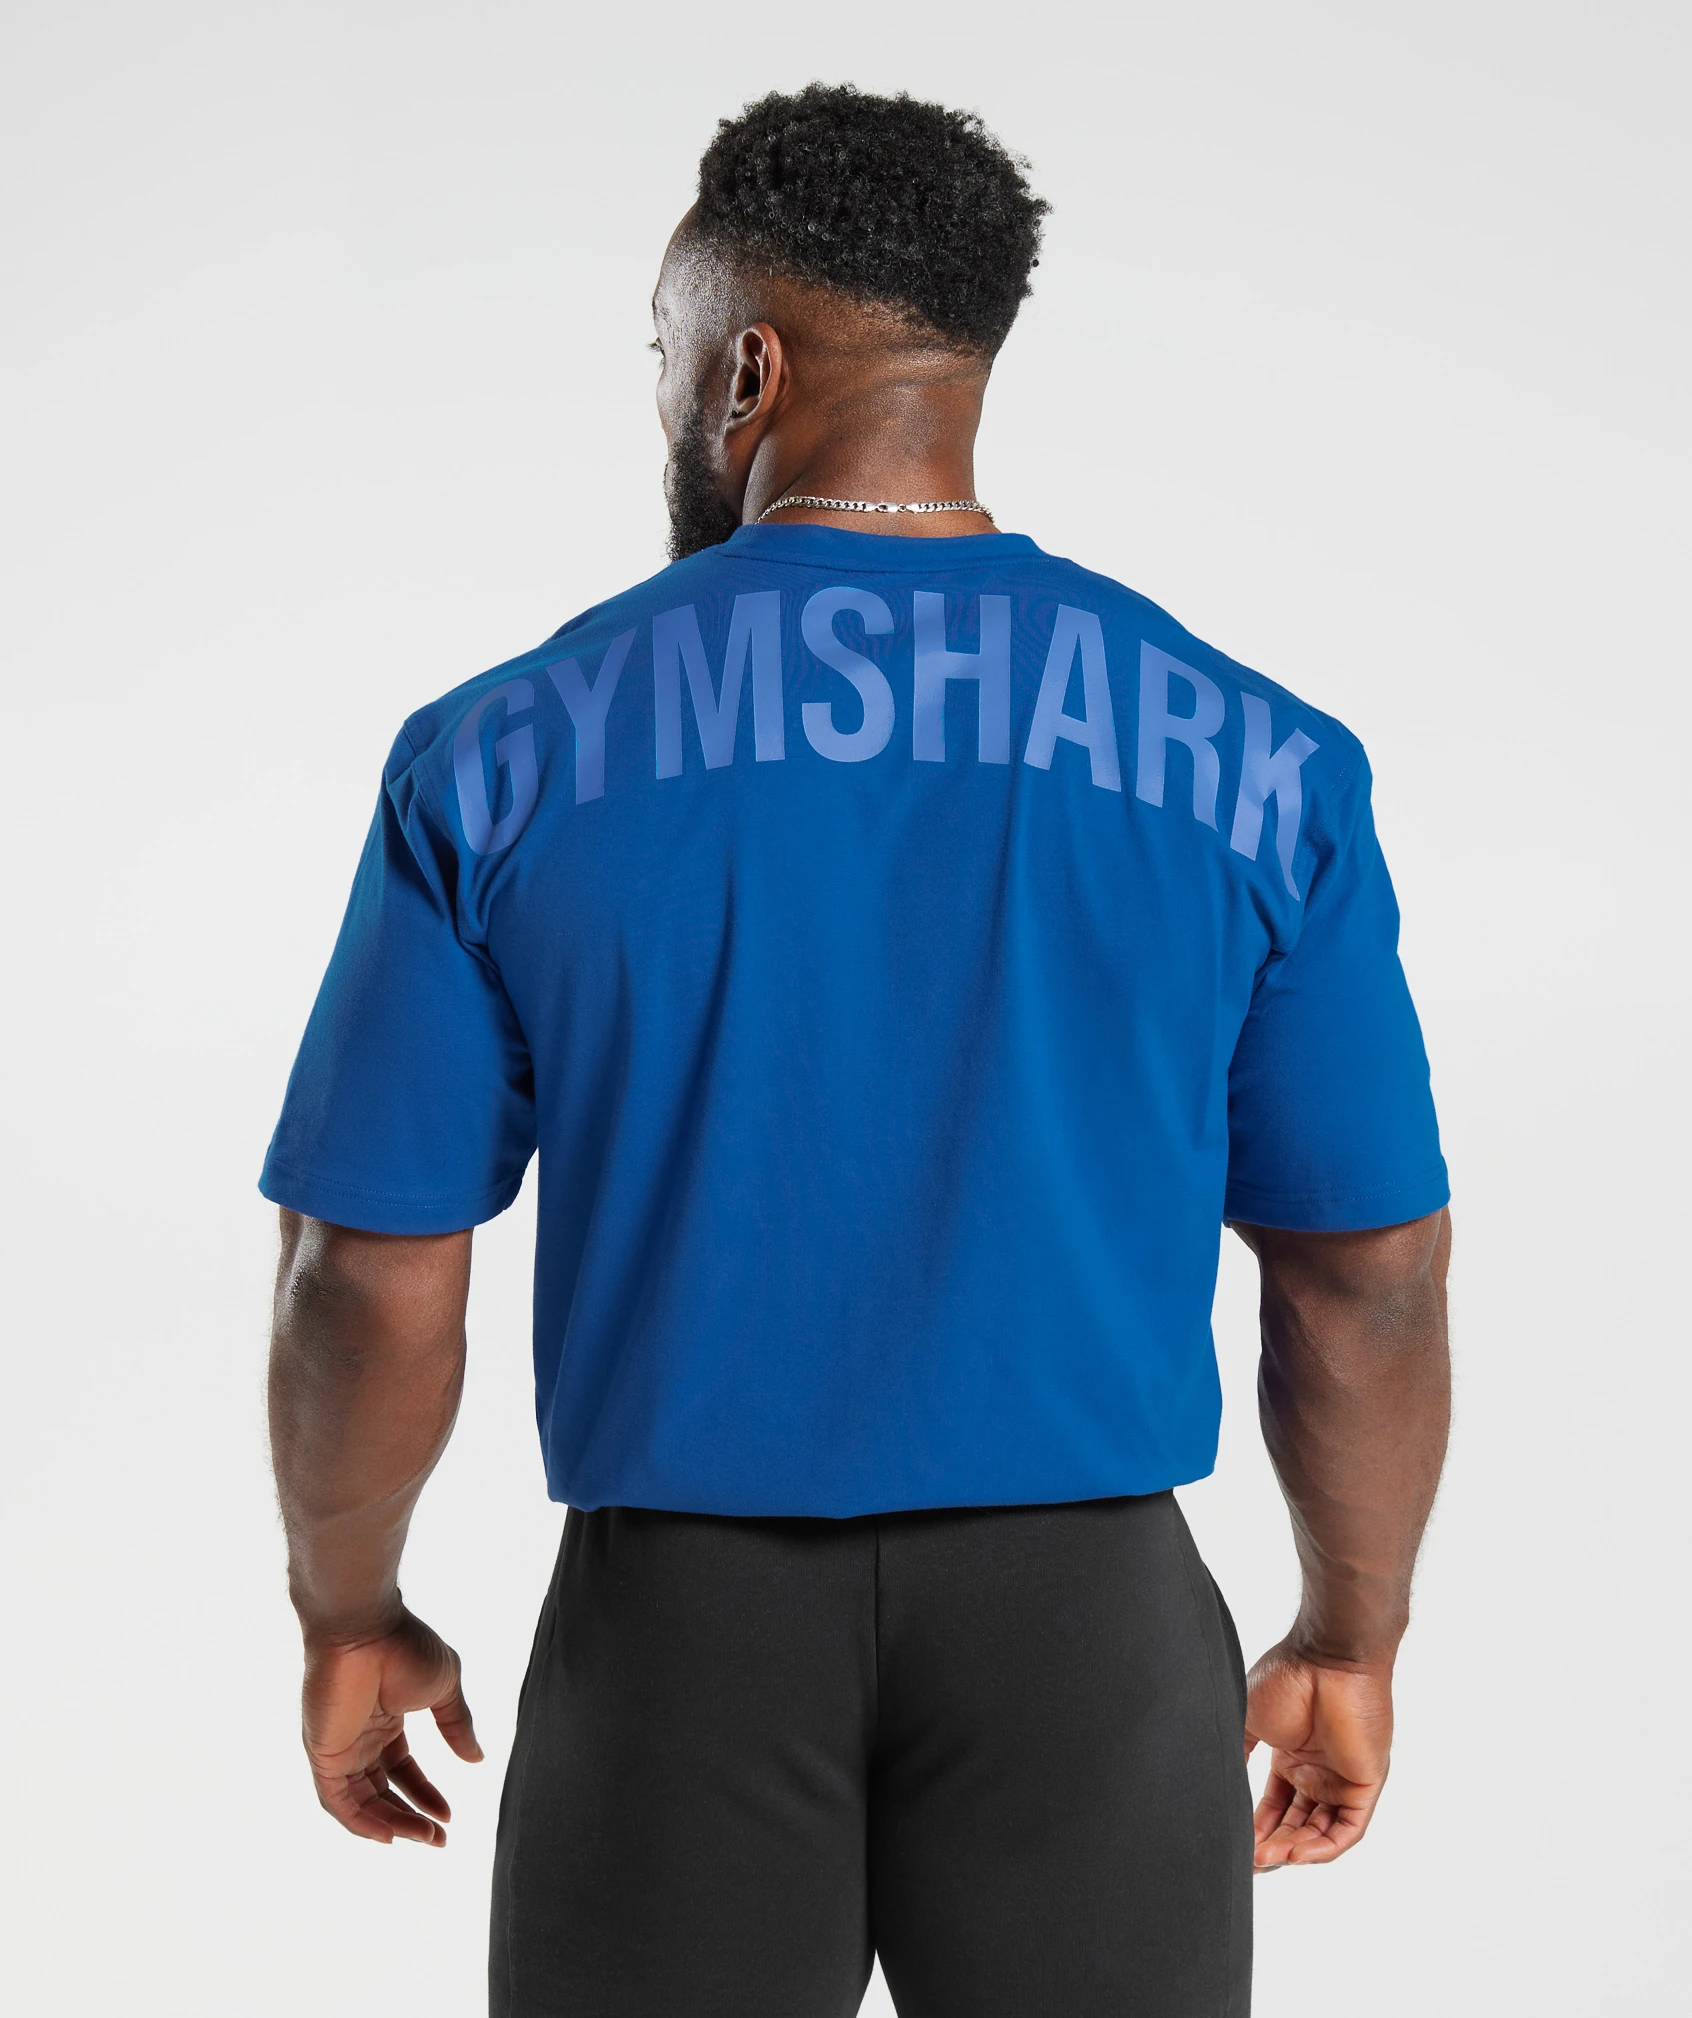 Shop GymShark Undershirts & Socks by eightshop